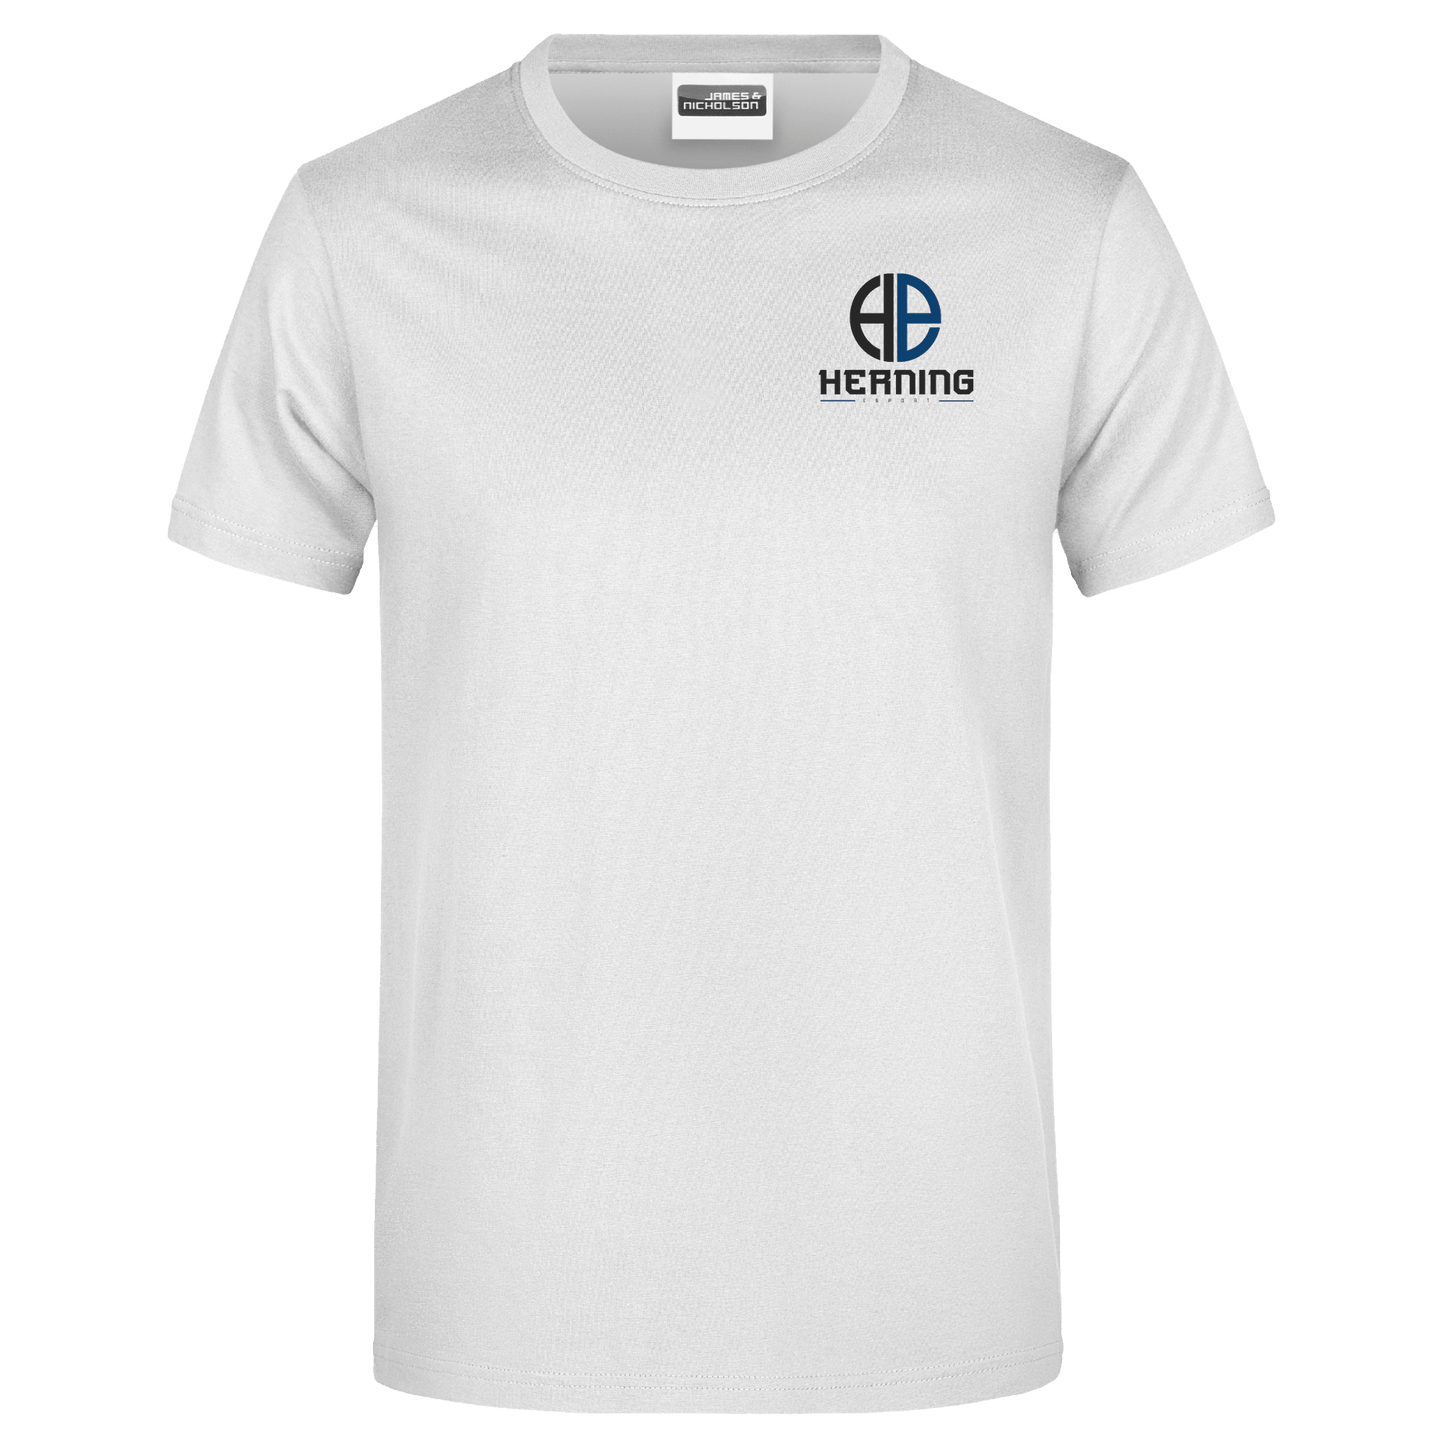 Bomulds T-shirt - Voksen - Herning Esport